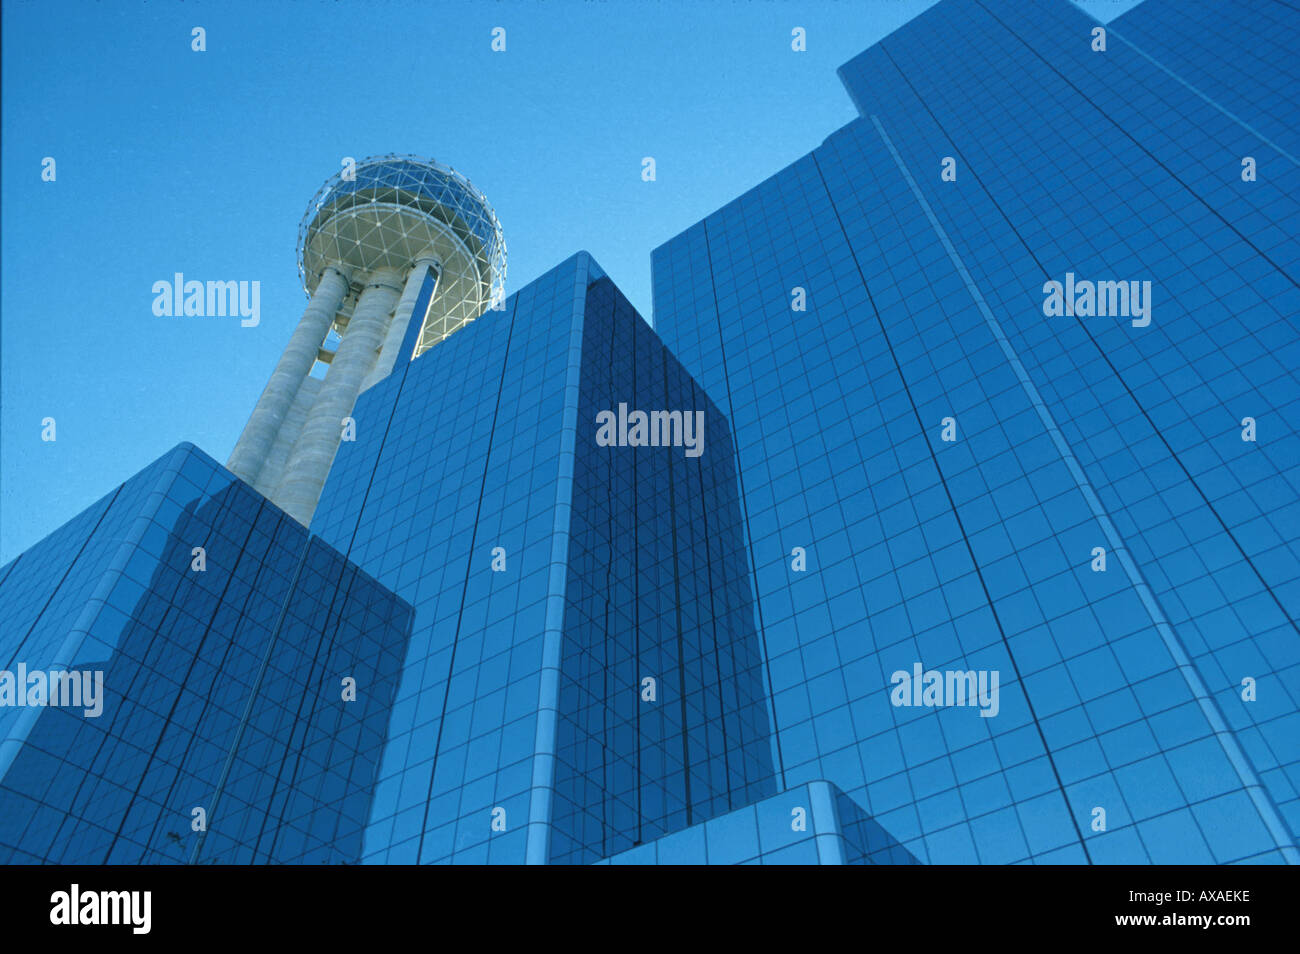 Glass facade with tower in Dallas, Texas, USA Stock Photo